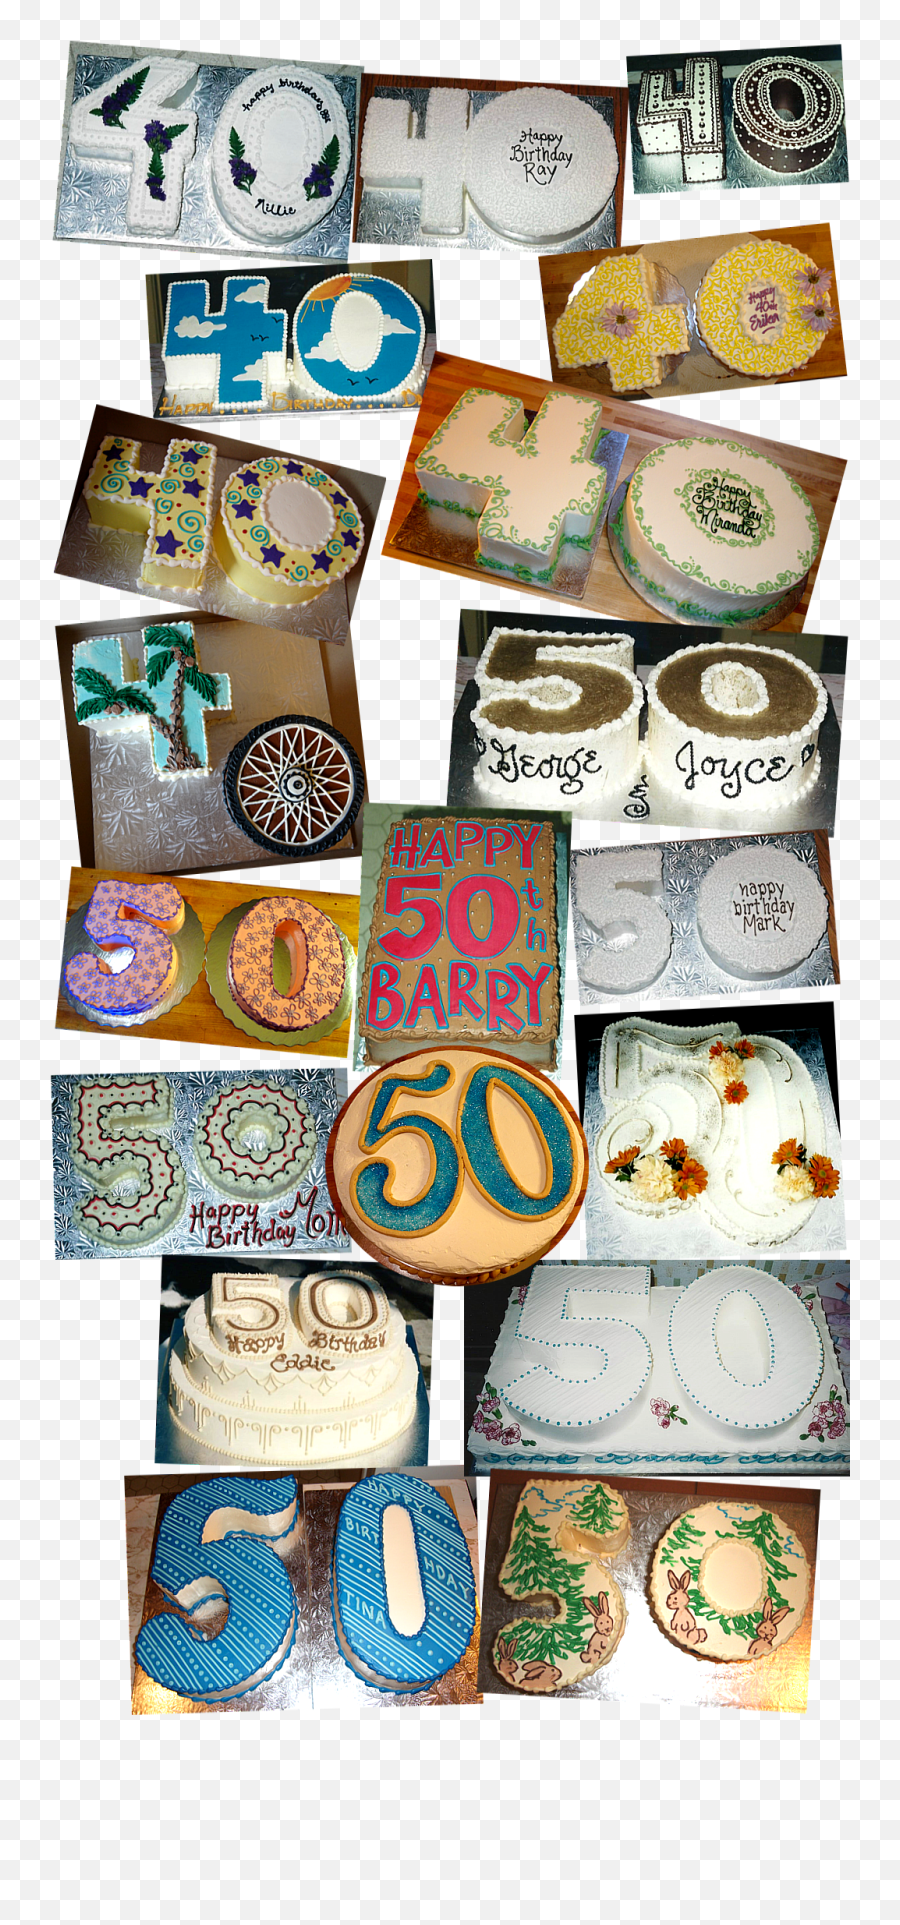 The Cake Lady Kitchen - Portfolio Of Cakes Numbers Emoji,Images Of Happy Birthday Cake Shaped Like M With Emojis